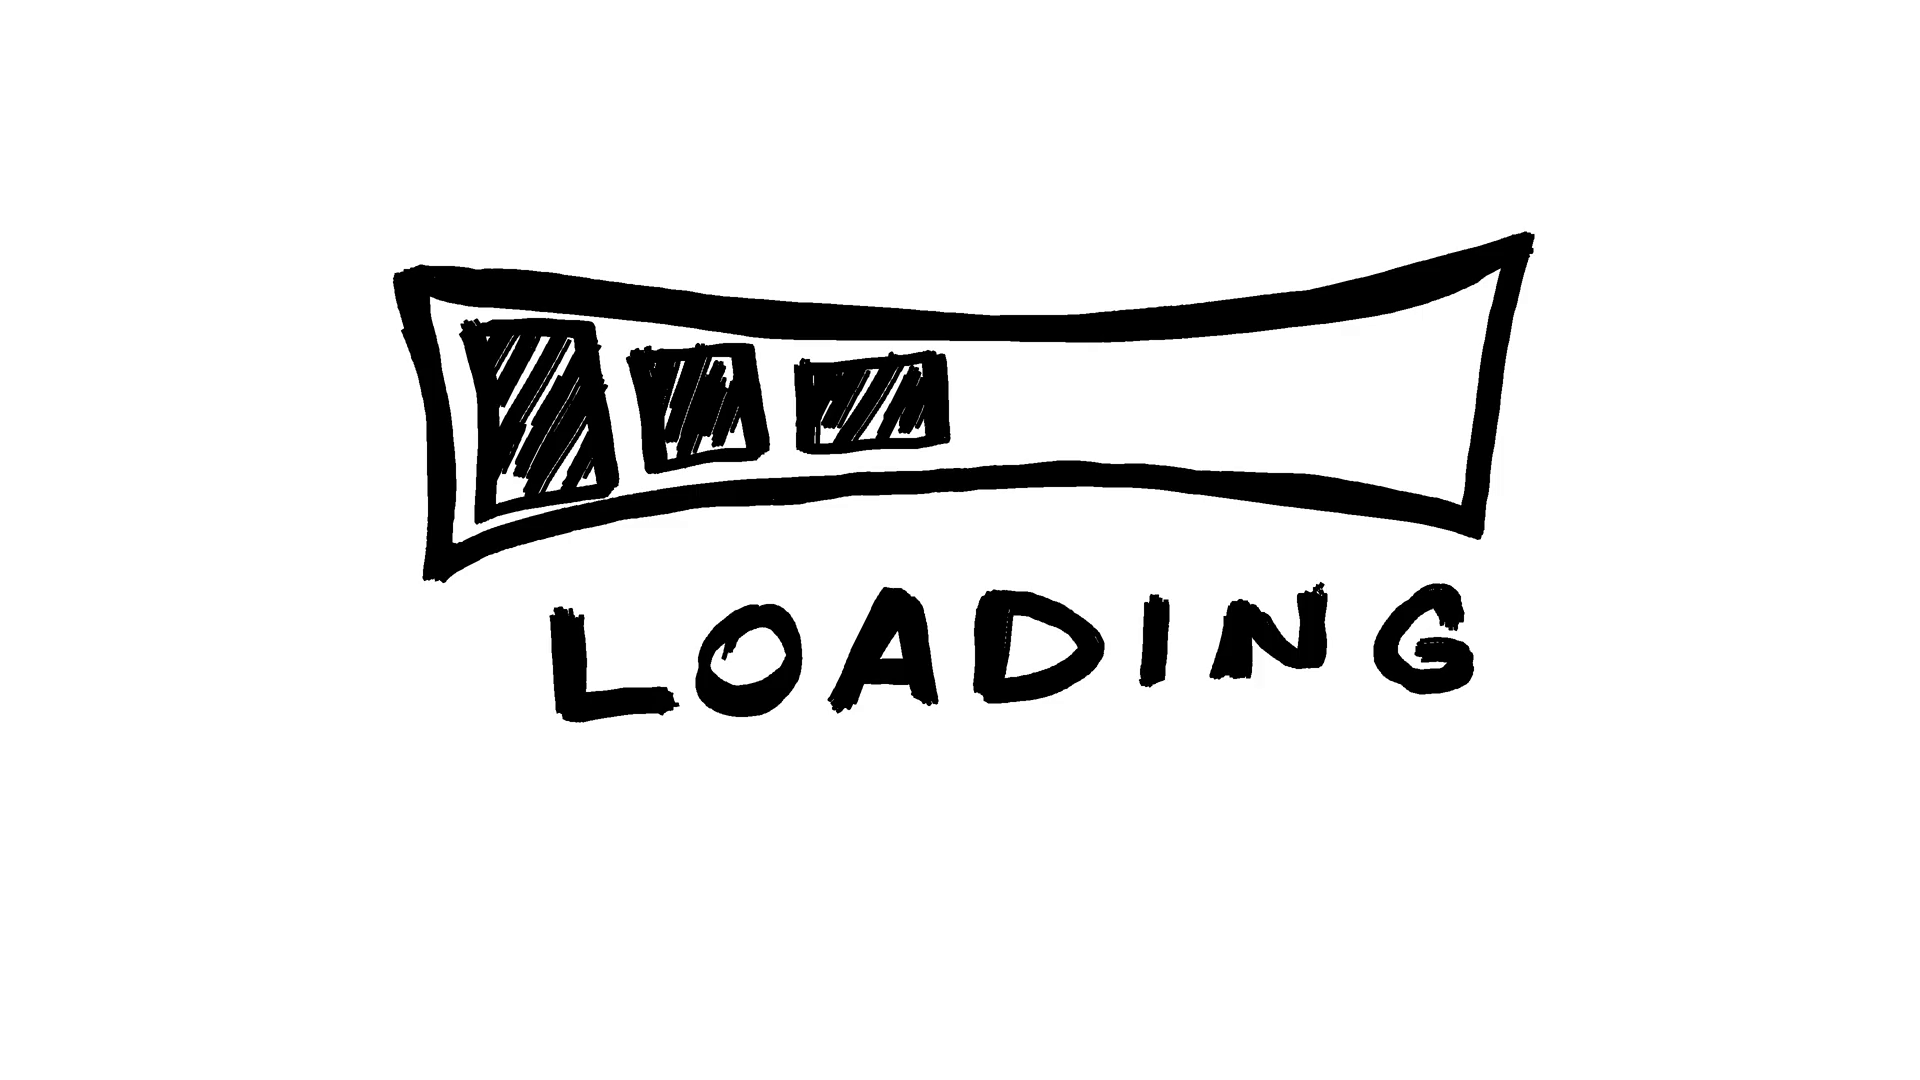 Loading Bar Scribble Animation Doodle White Background 4K Stock ...